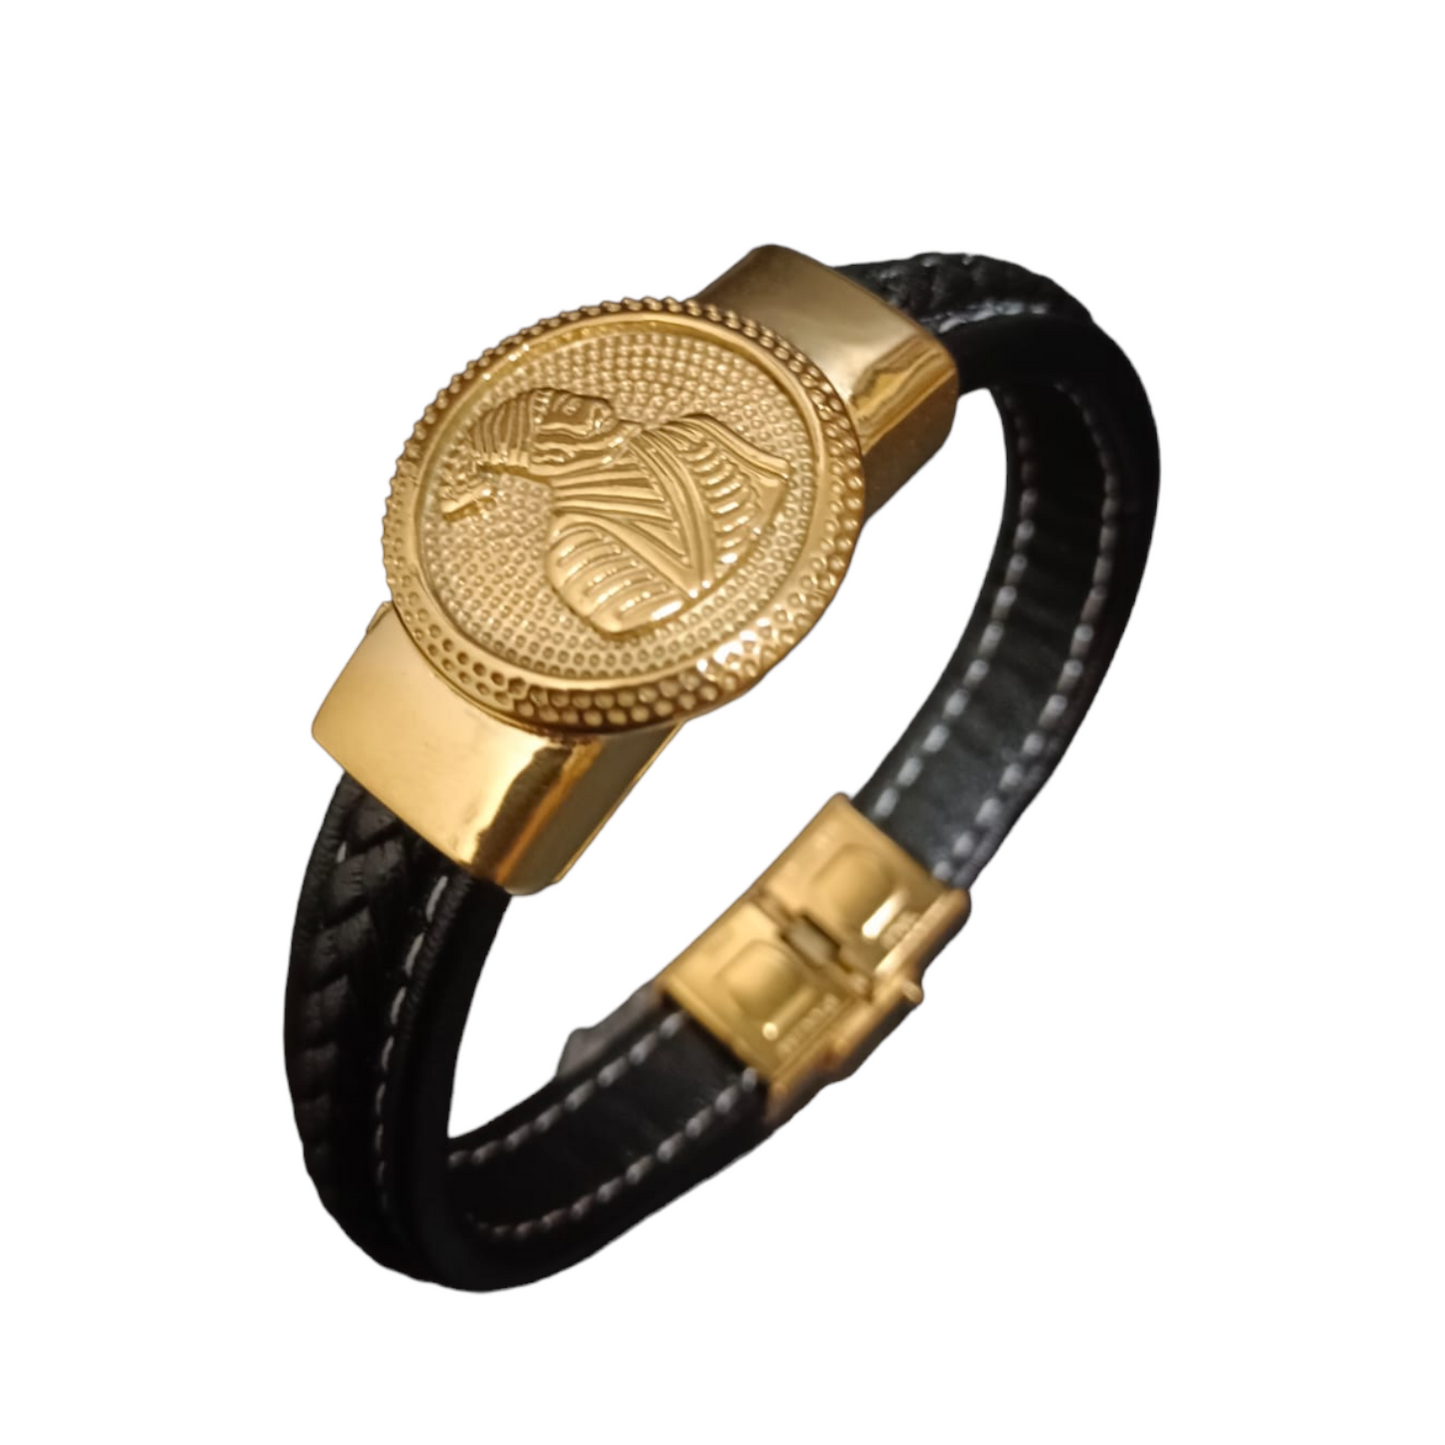 New Shree Ganesh Devotional Gold Bracelet